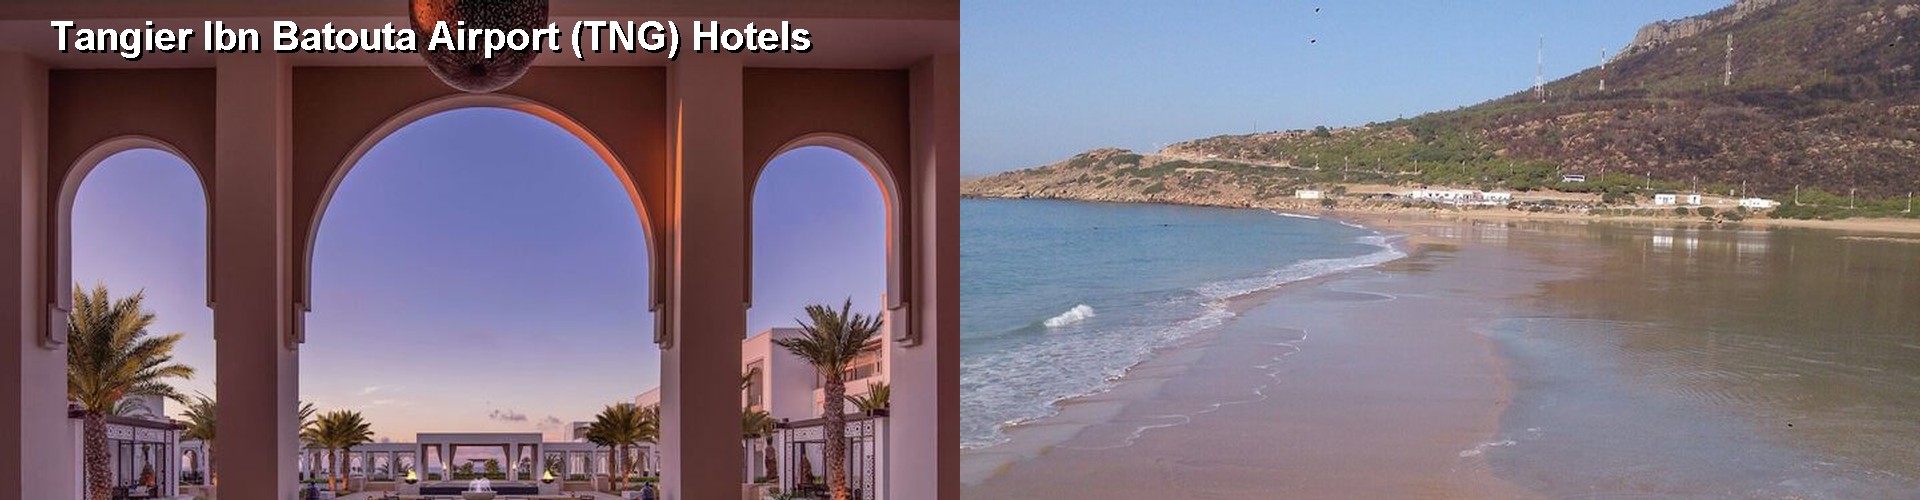 2 Best Hotels near Tangier Ibn Batouta Airport (TNG)